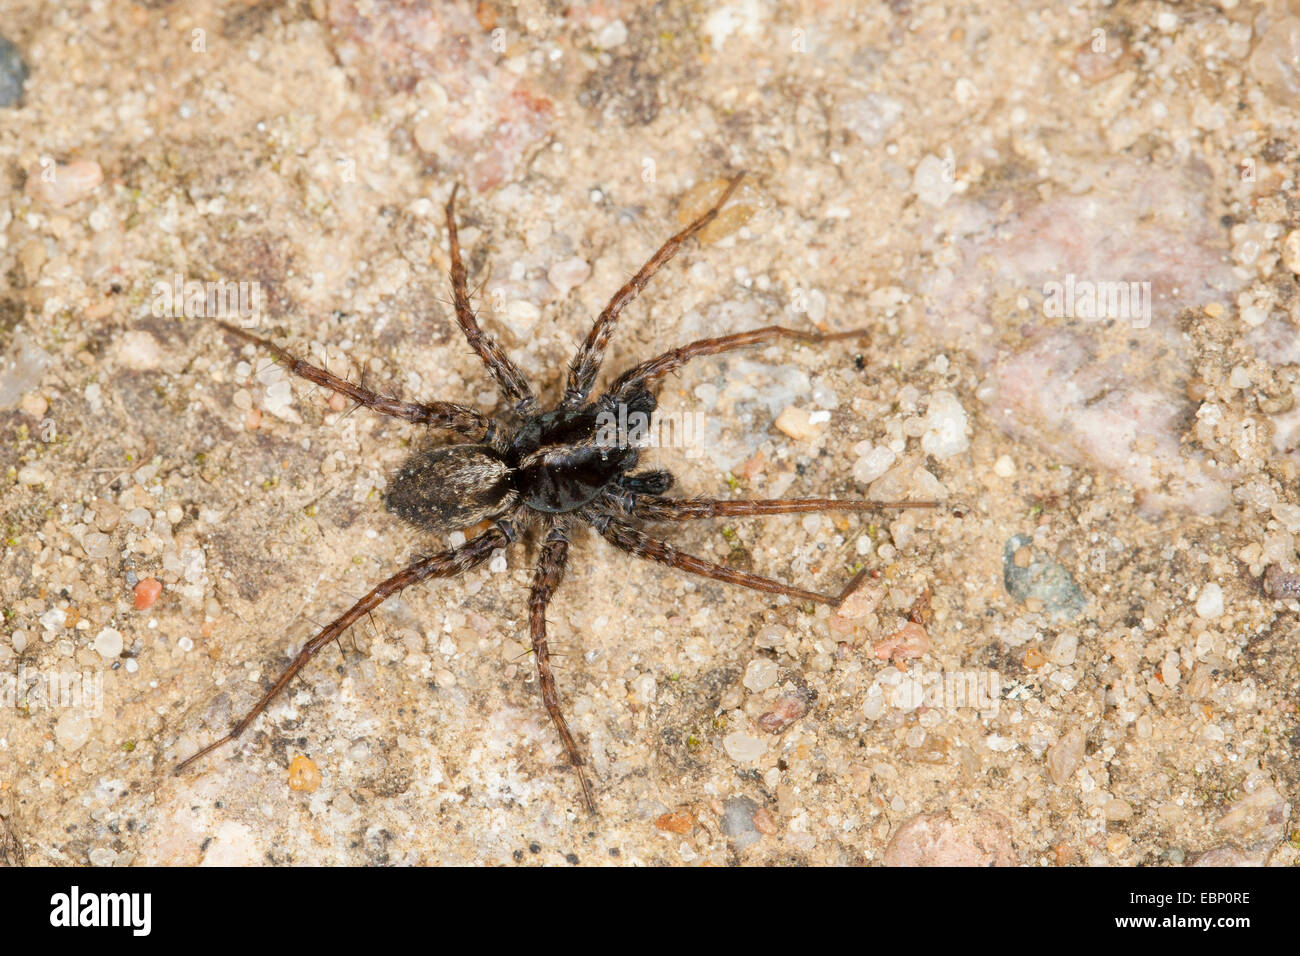 Spotted wolf spider, Ground spider (Pardosa amentata), on the ground Stock Photo